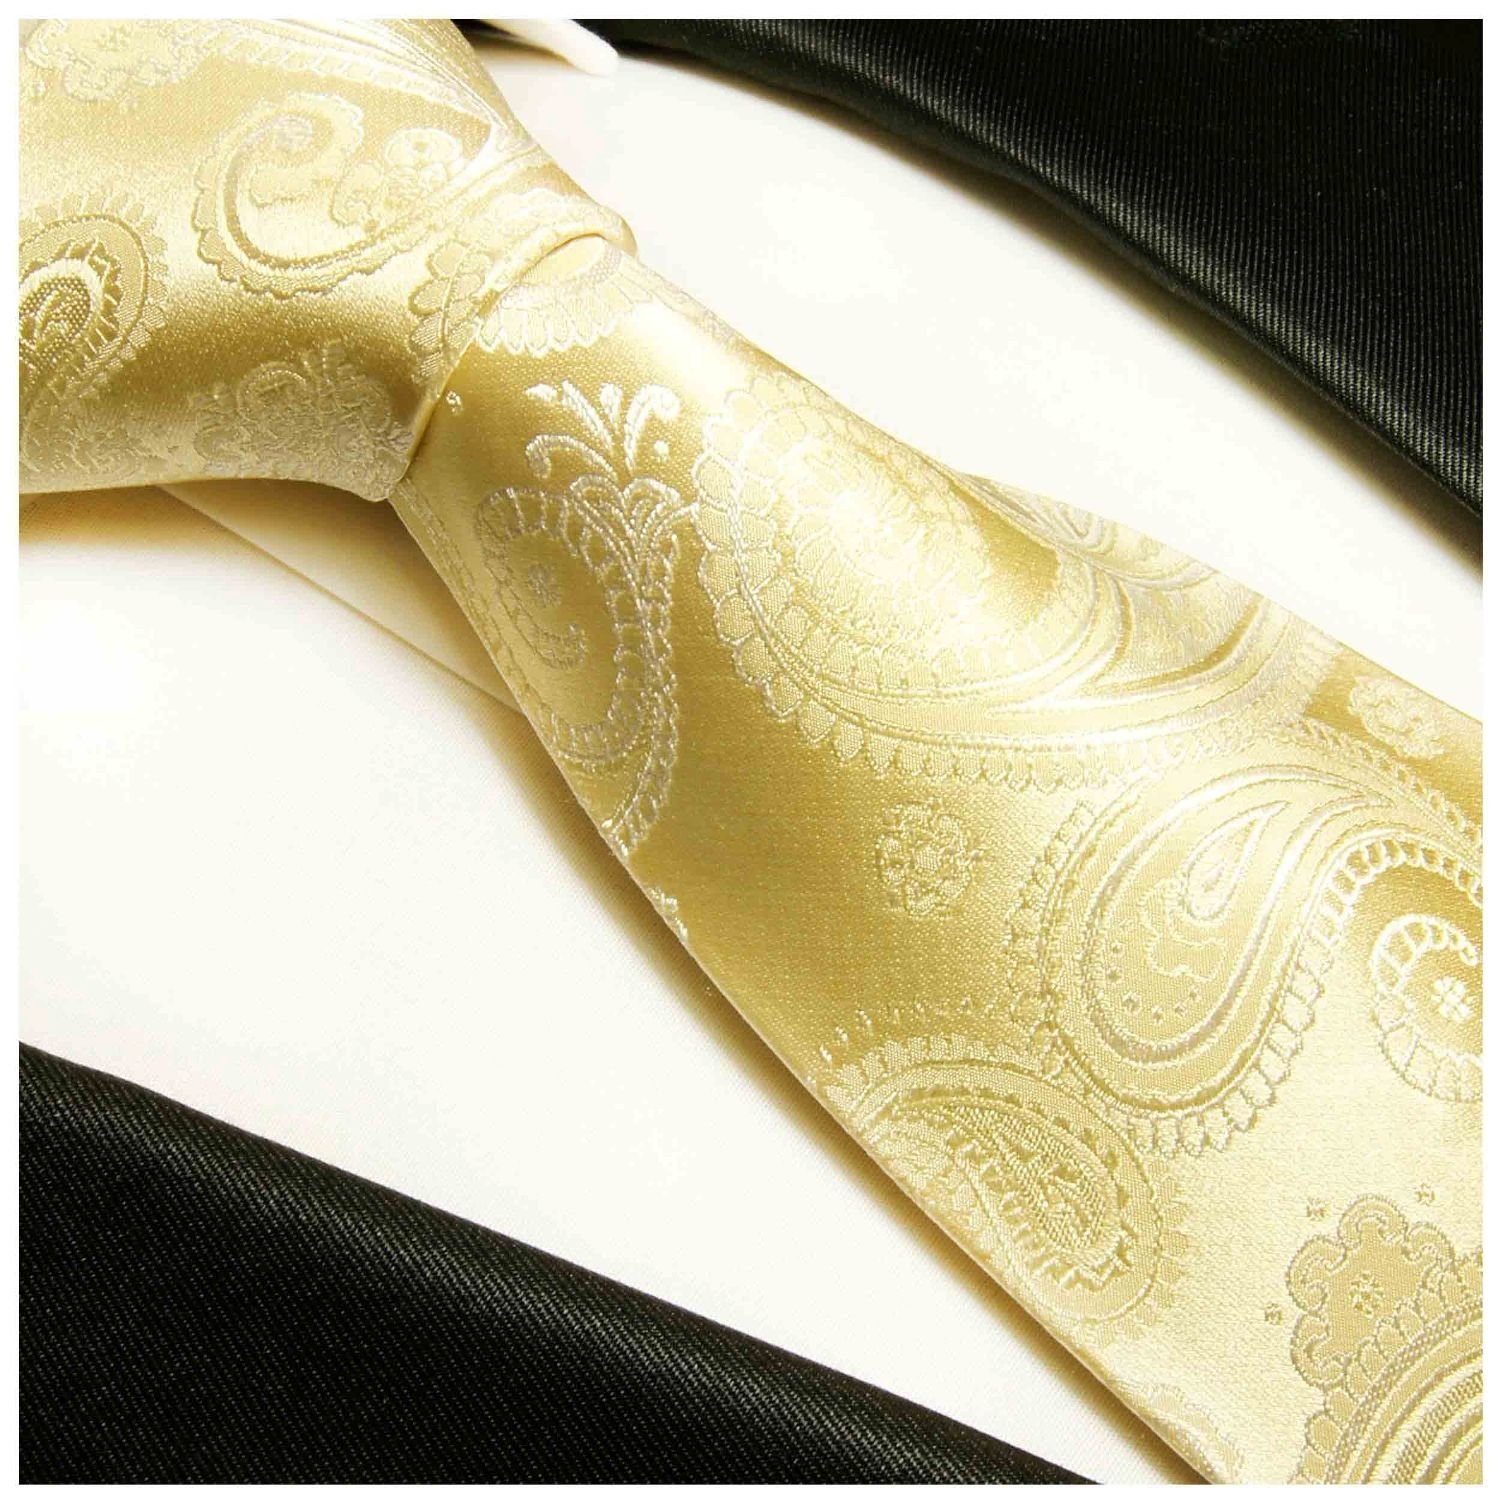 Paul champagner Malone 442 Seide paisley Herren (6cm), brokat Elegante Schmal Schlips 100% Krawatte Seidenkrawatte